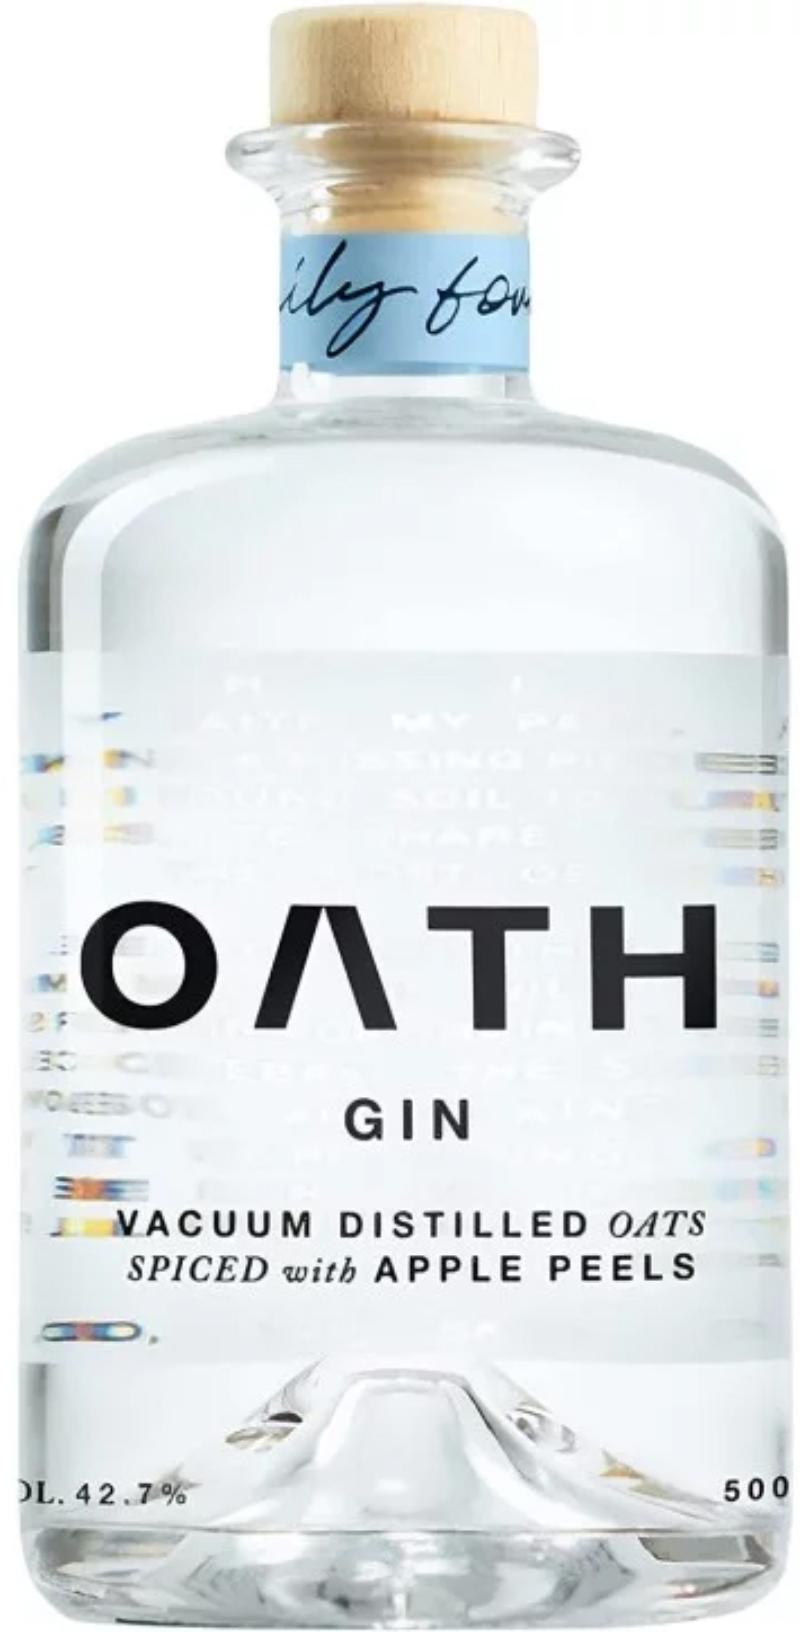 42.7% - vol Gin Oath 50 Oath cl Gin